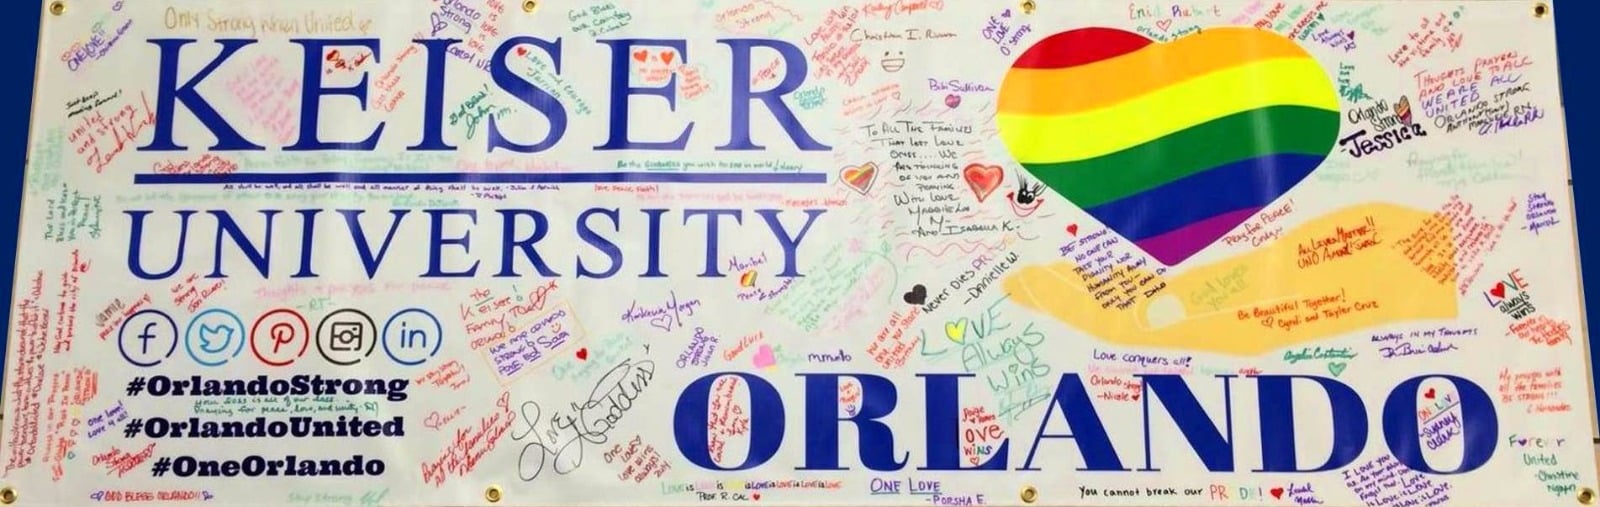 Keiser University Orlando Raises Money for OneOrlando Fund